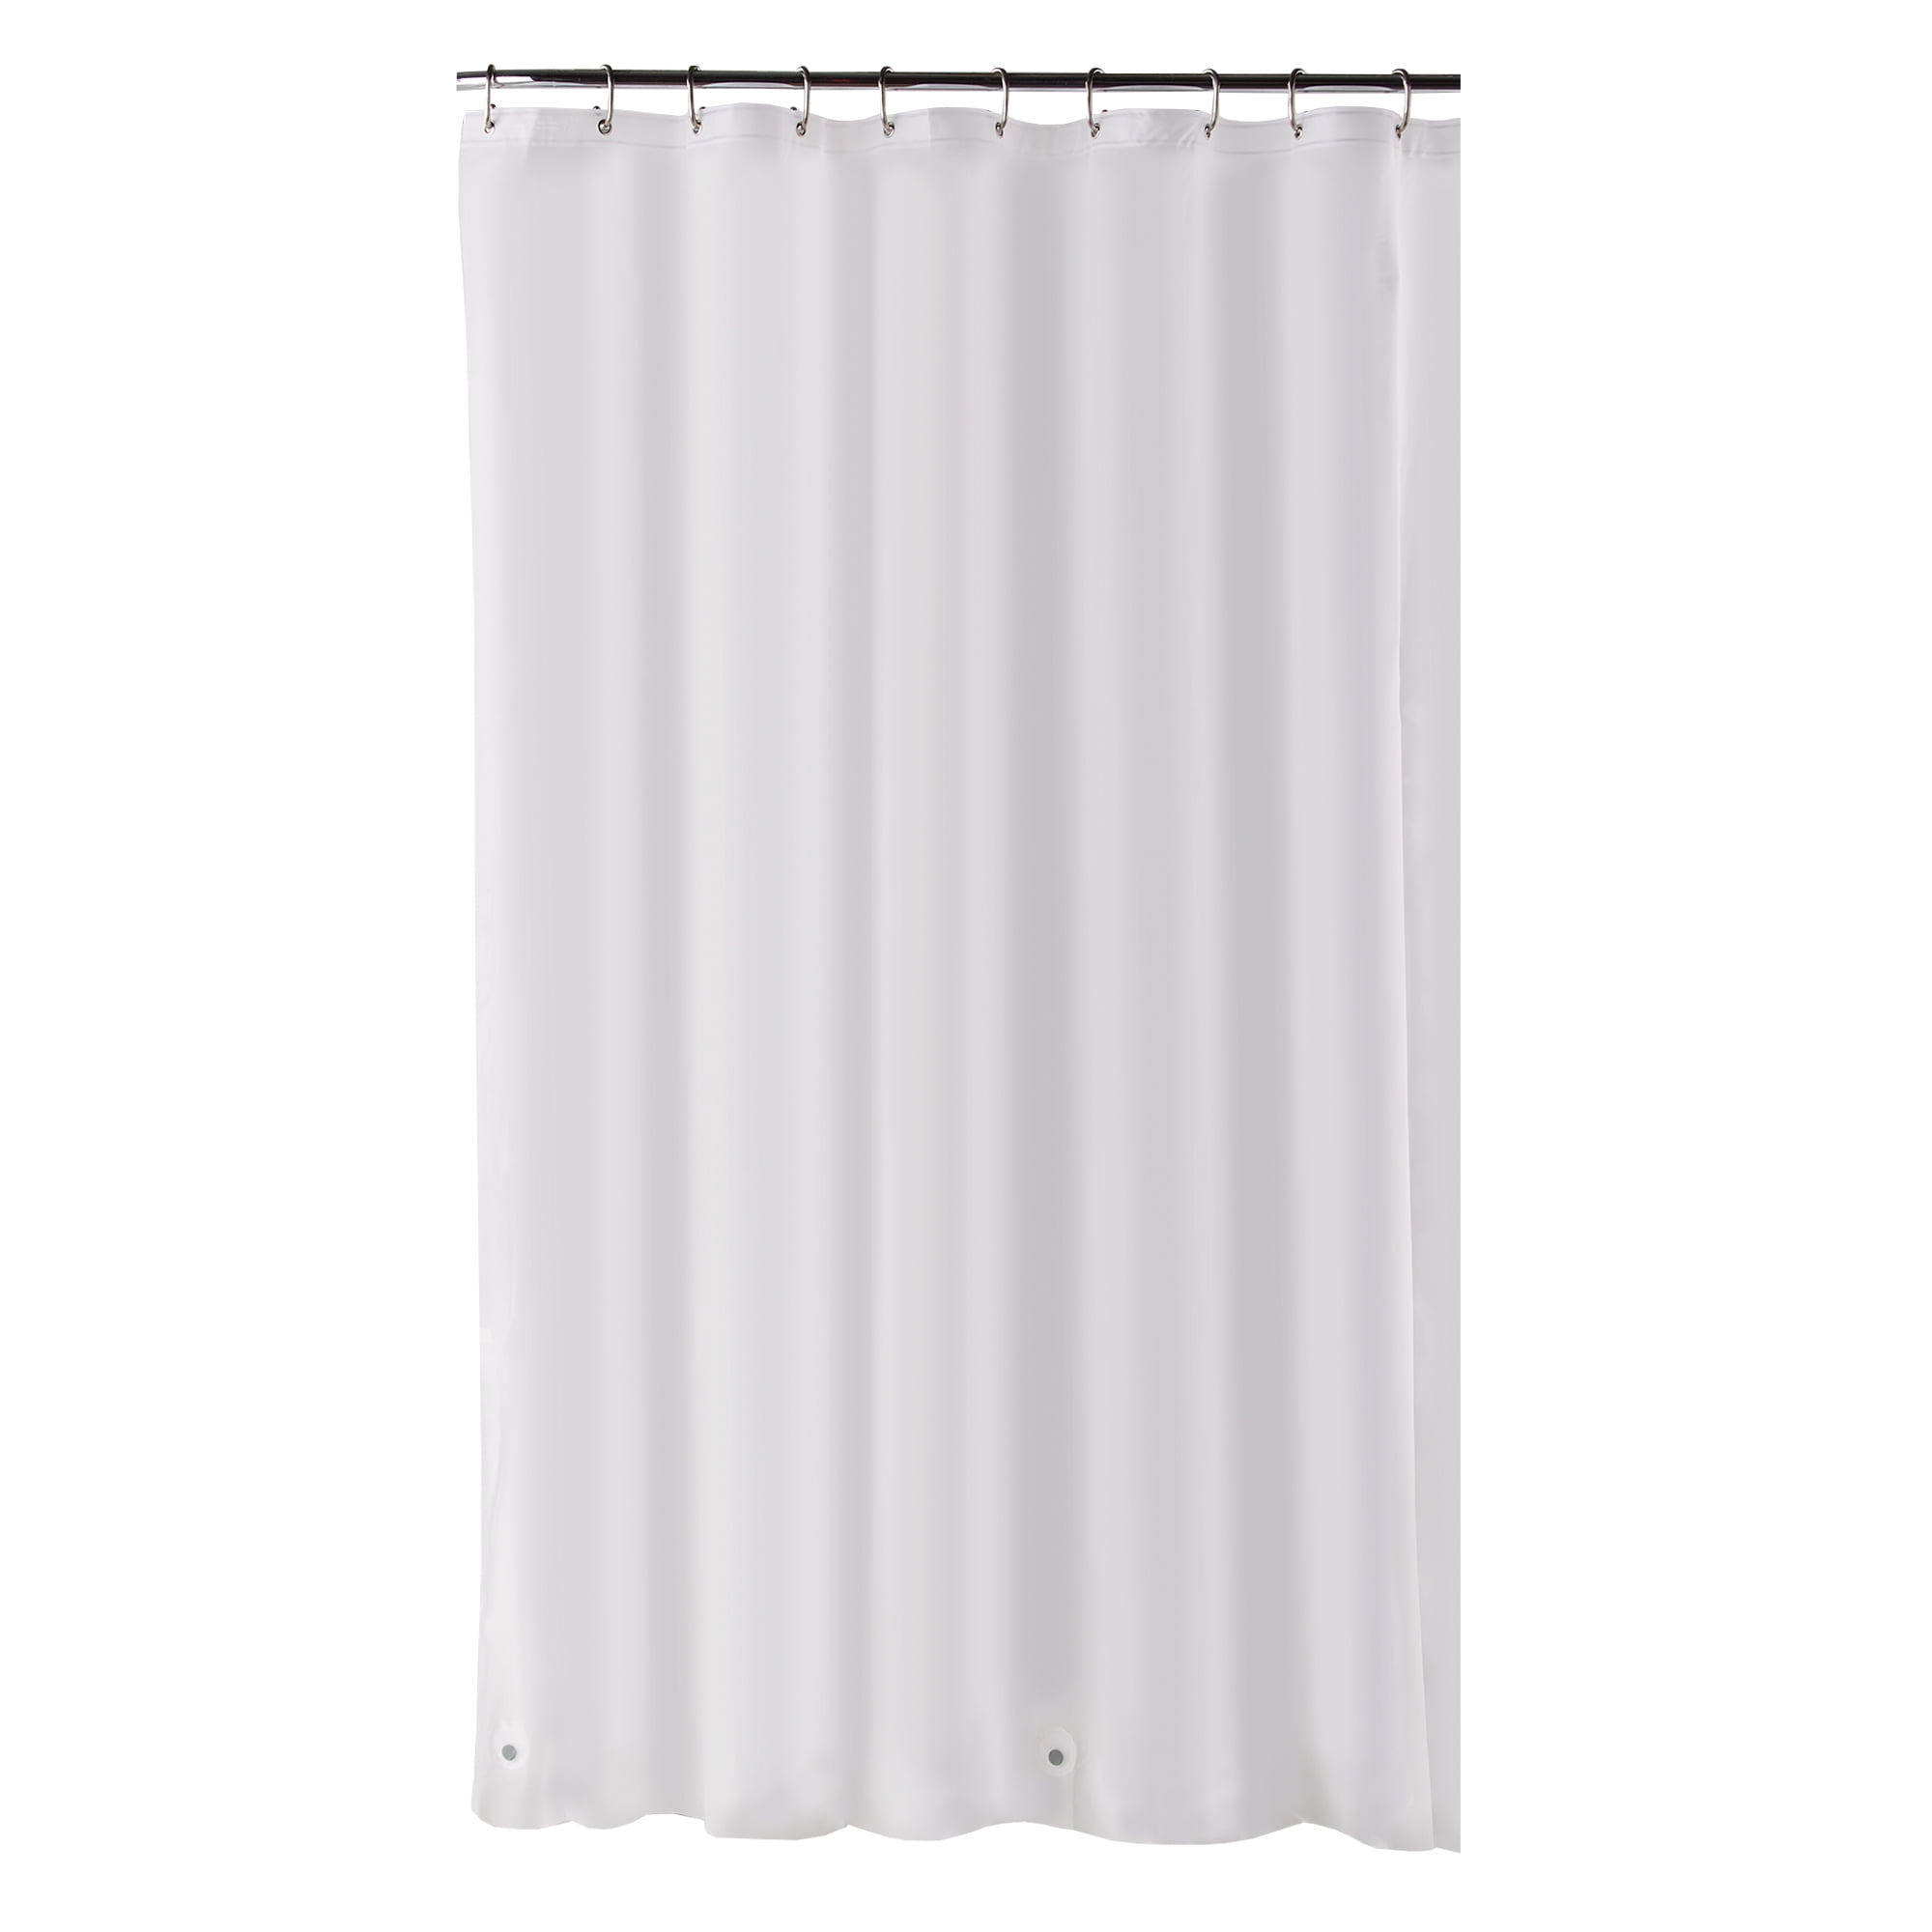 Clorox PEVA Heavyweight Shower Curtain Liner-New-Premium Product-High Quality 